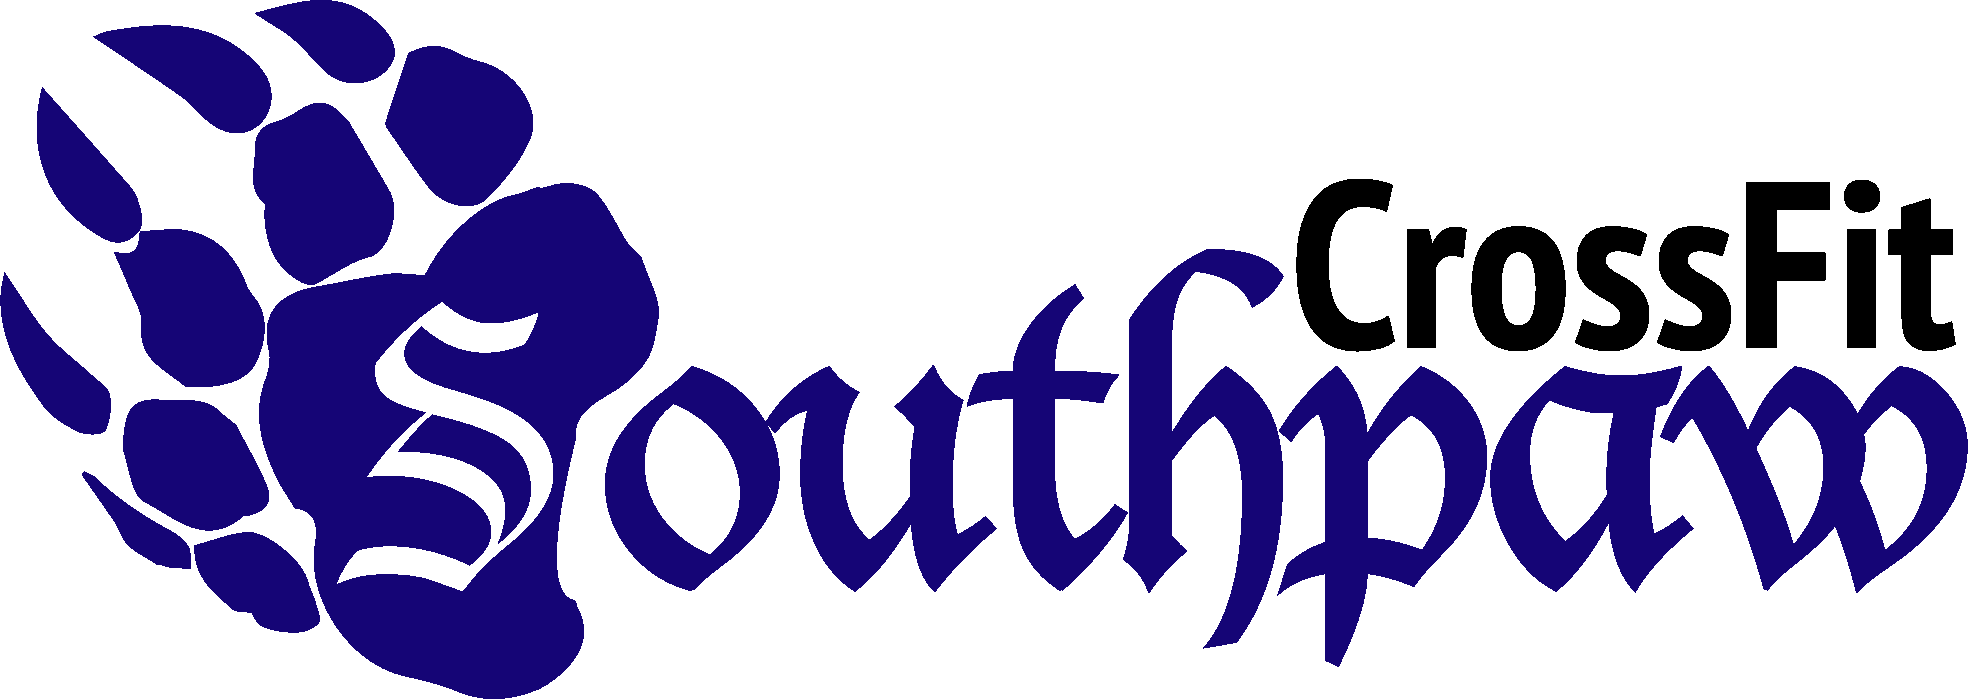 CrossFit Southpaw logo